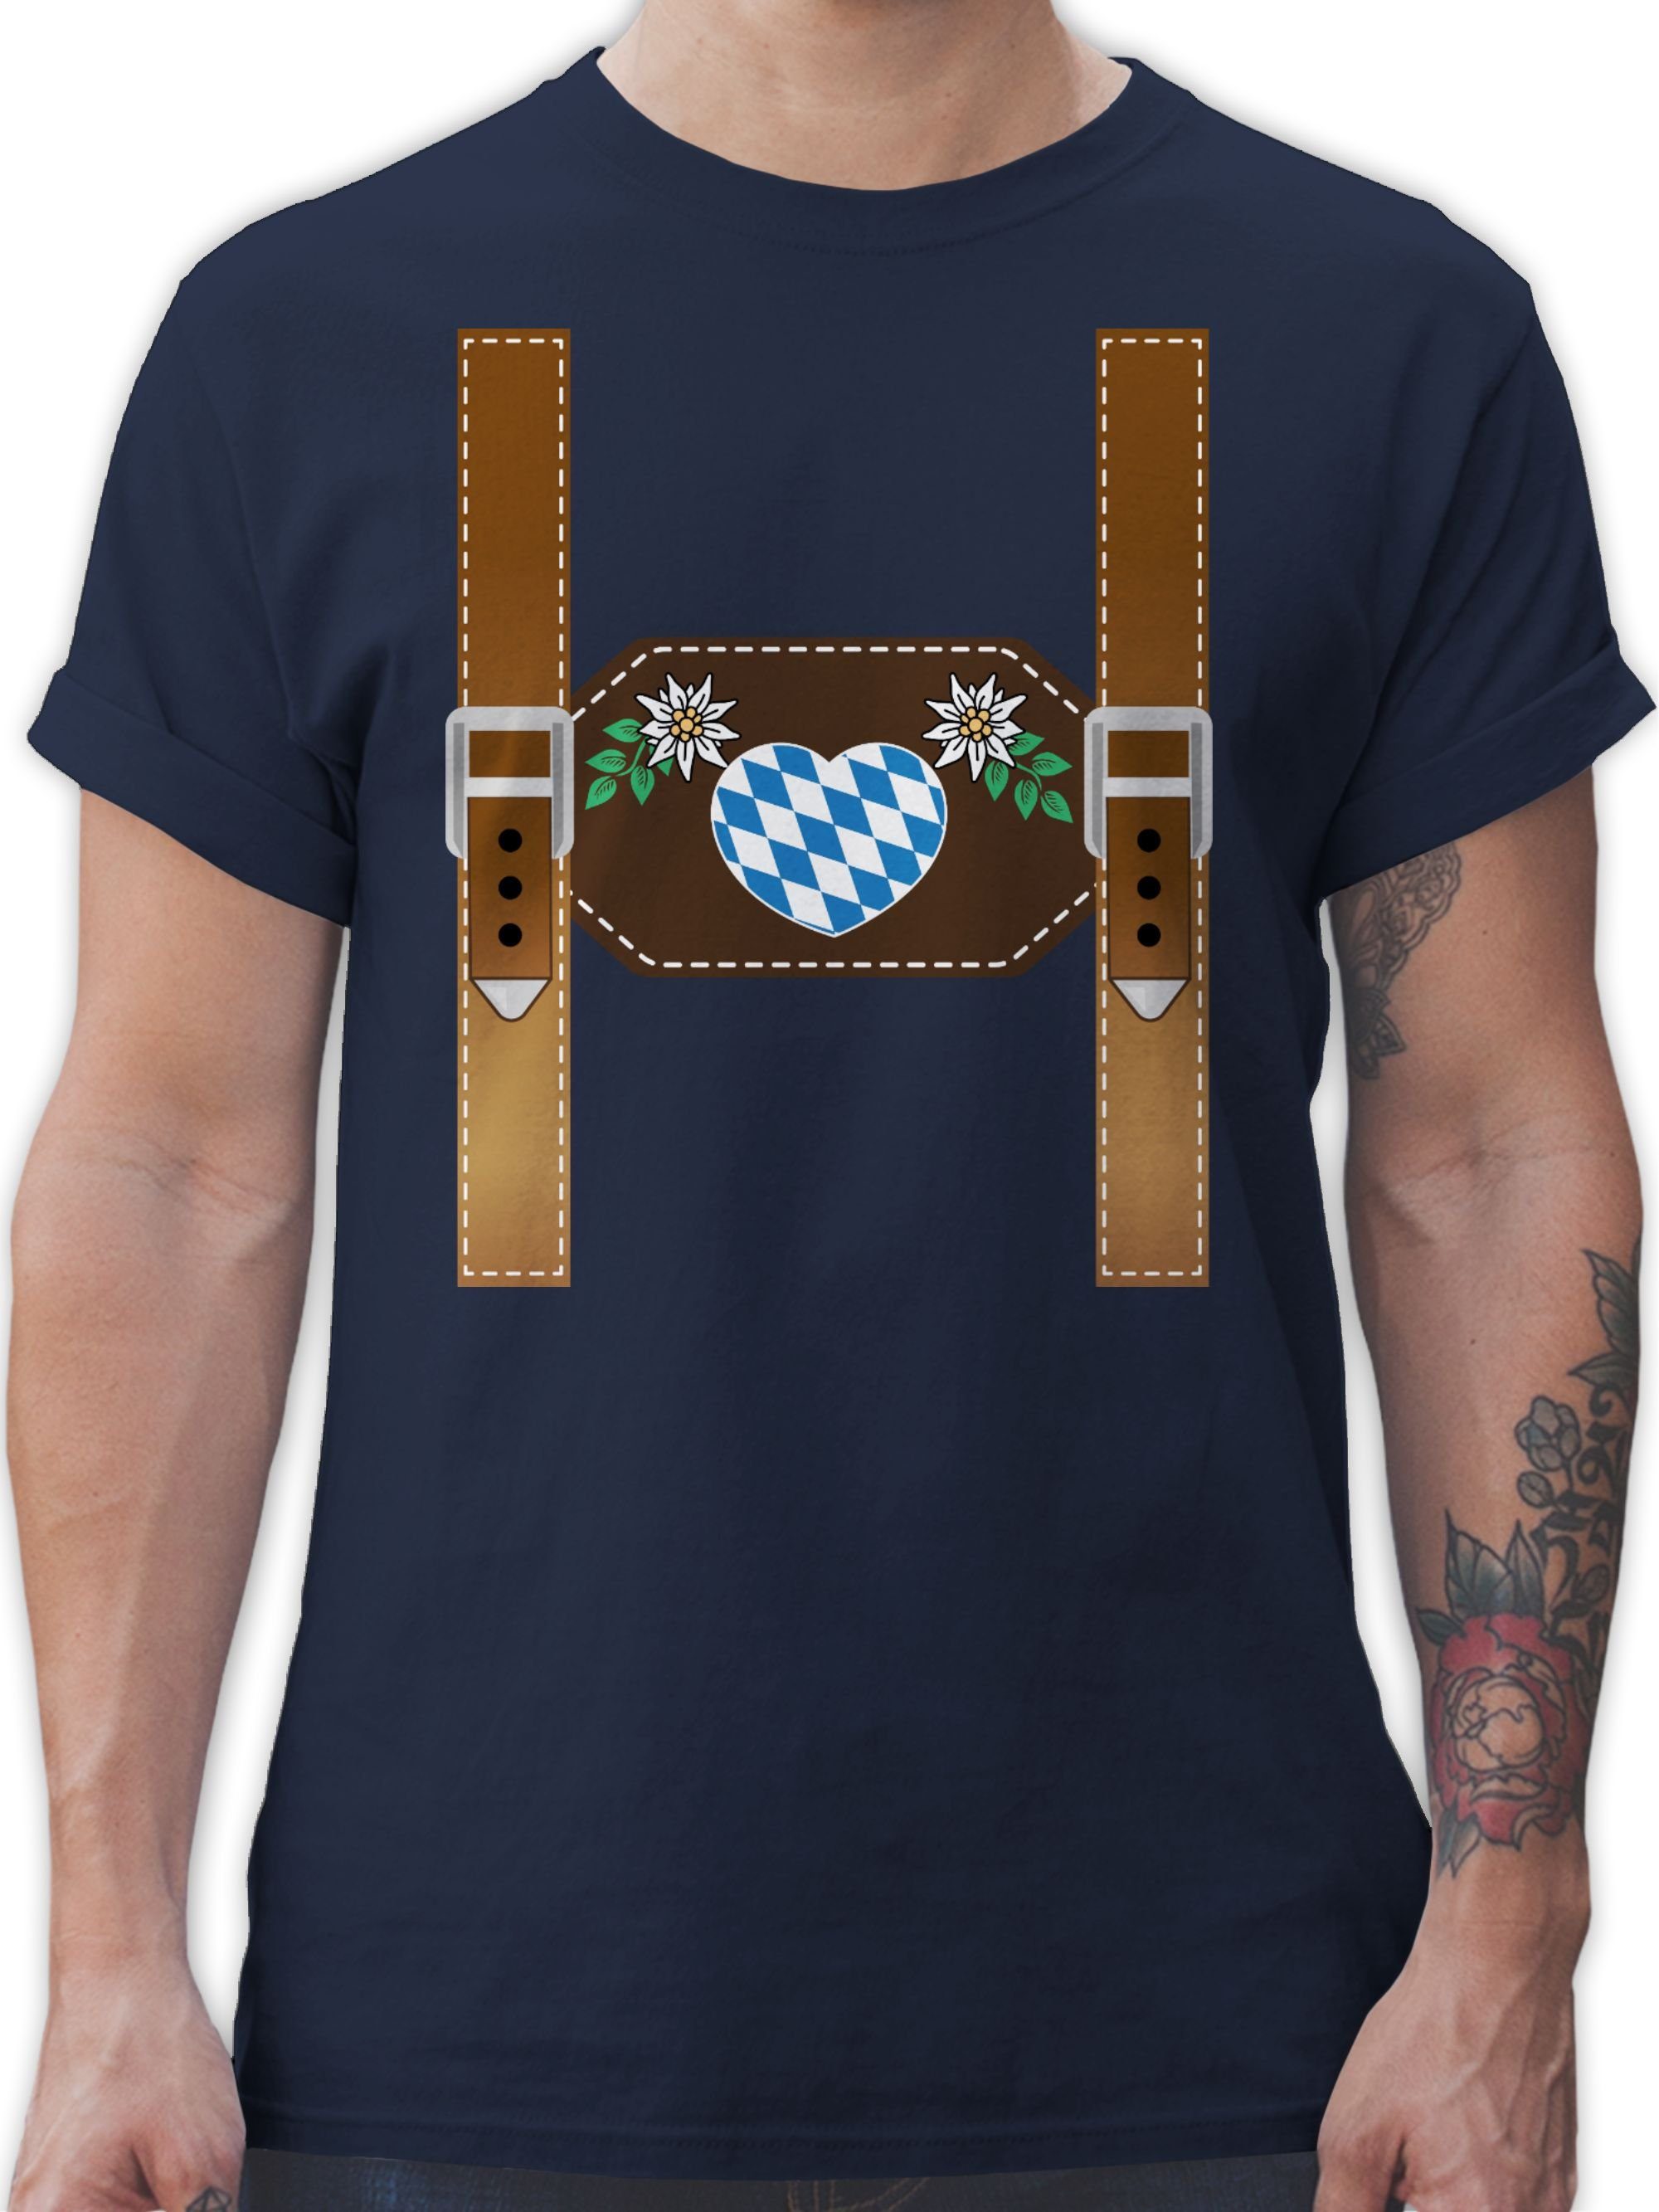 Shirtracer T-Shirt Lederhose - Herz Bayern Mode für Oktoberfest Herren 1 Navy Blau